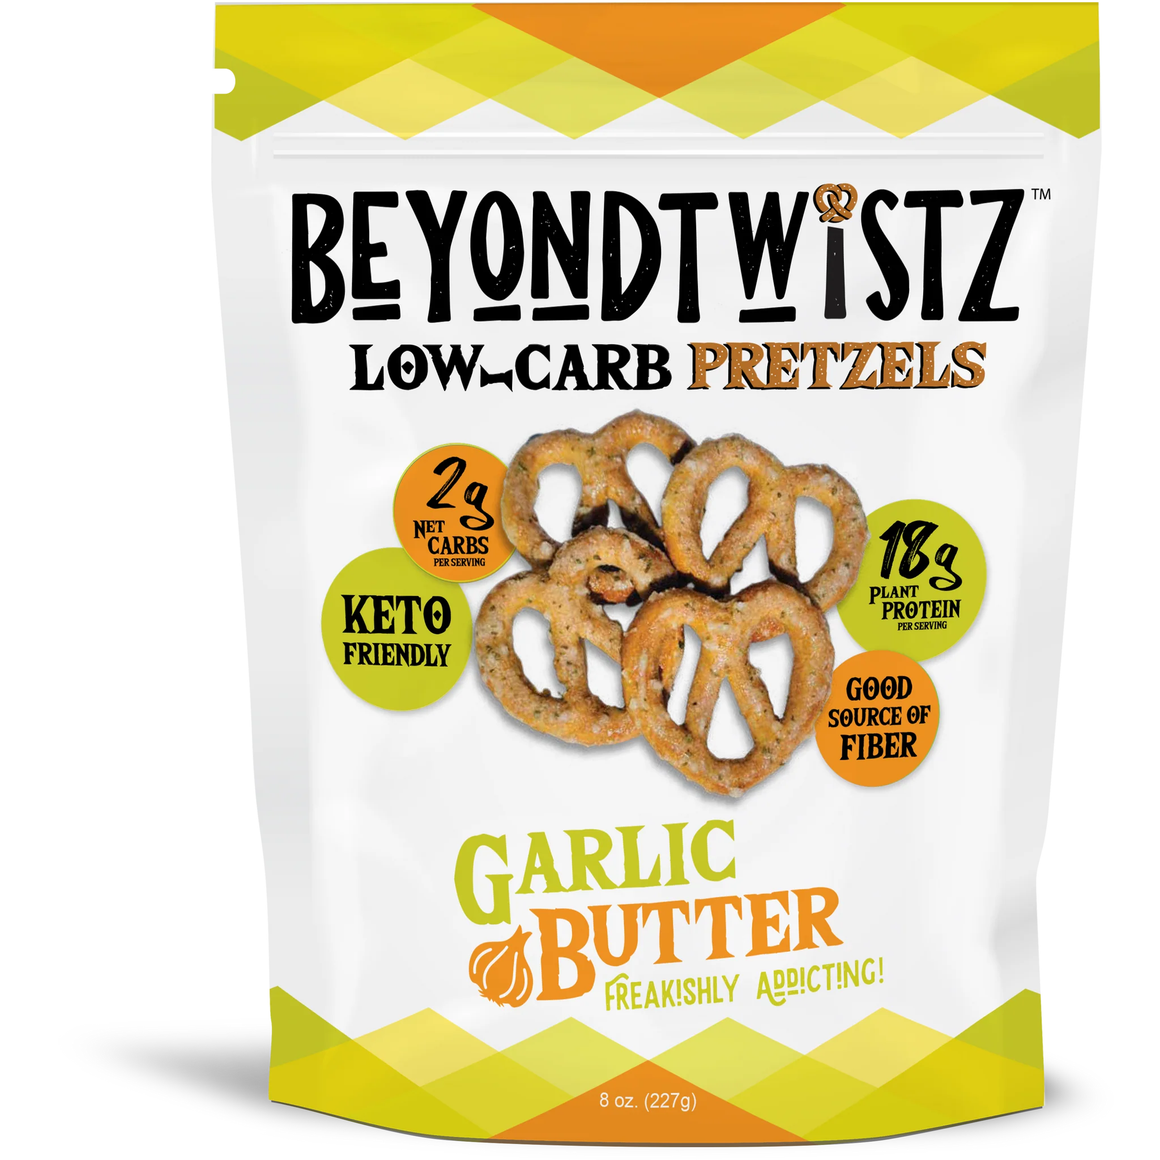 BeyondTwistz - Low Carb Pretzels - Garlic Butter - 8 oz Bag